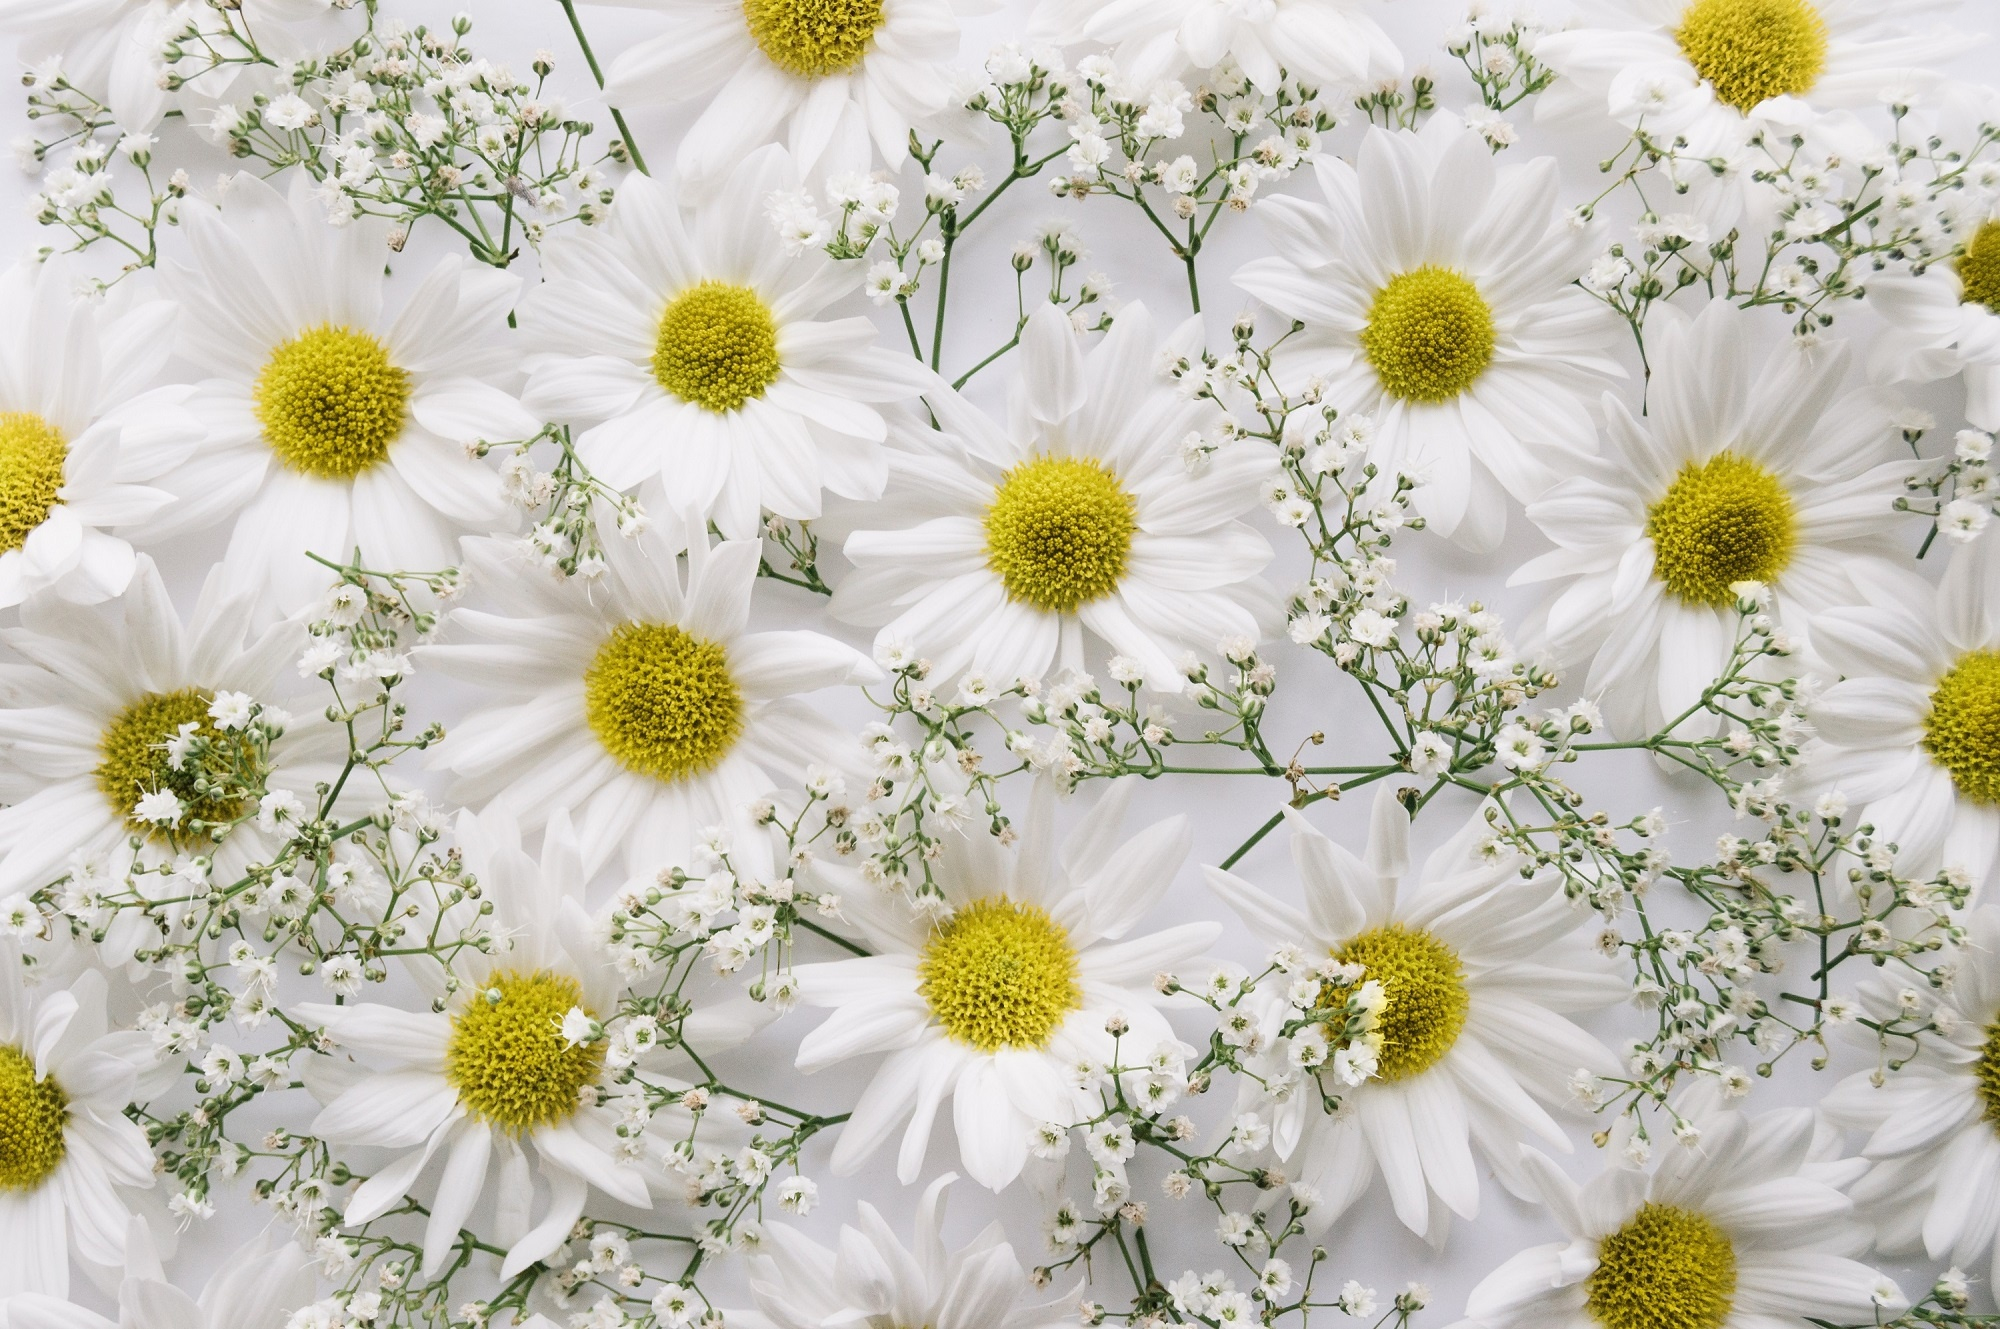 chrysanthemum, white flower, earth, flower, baby's breath, flowers